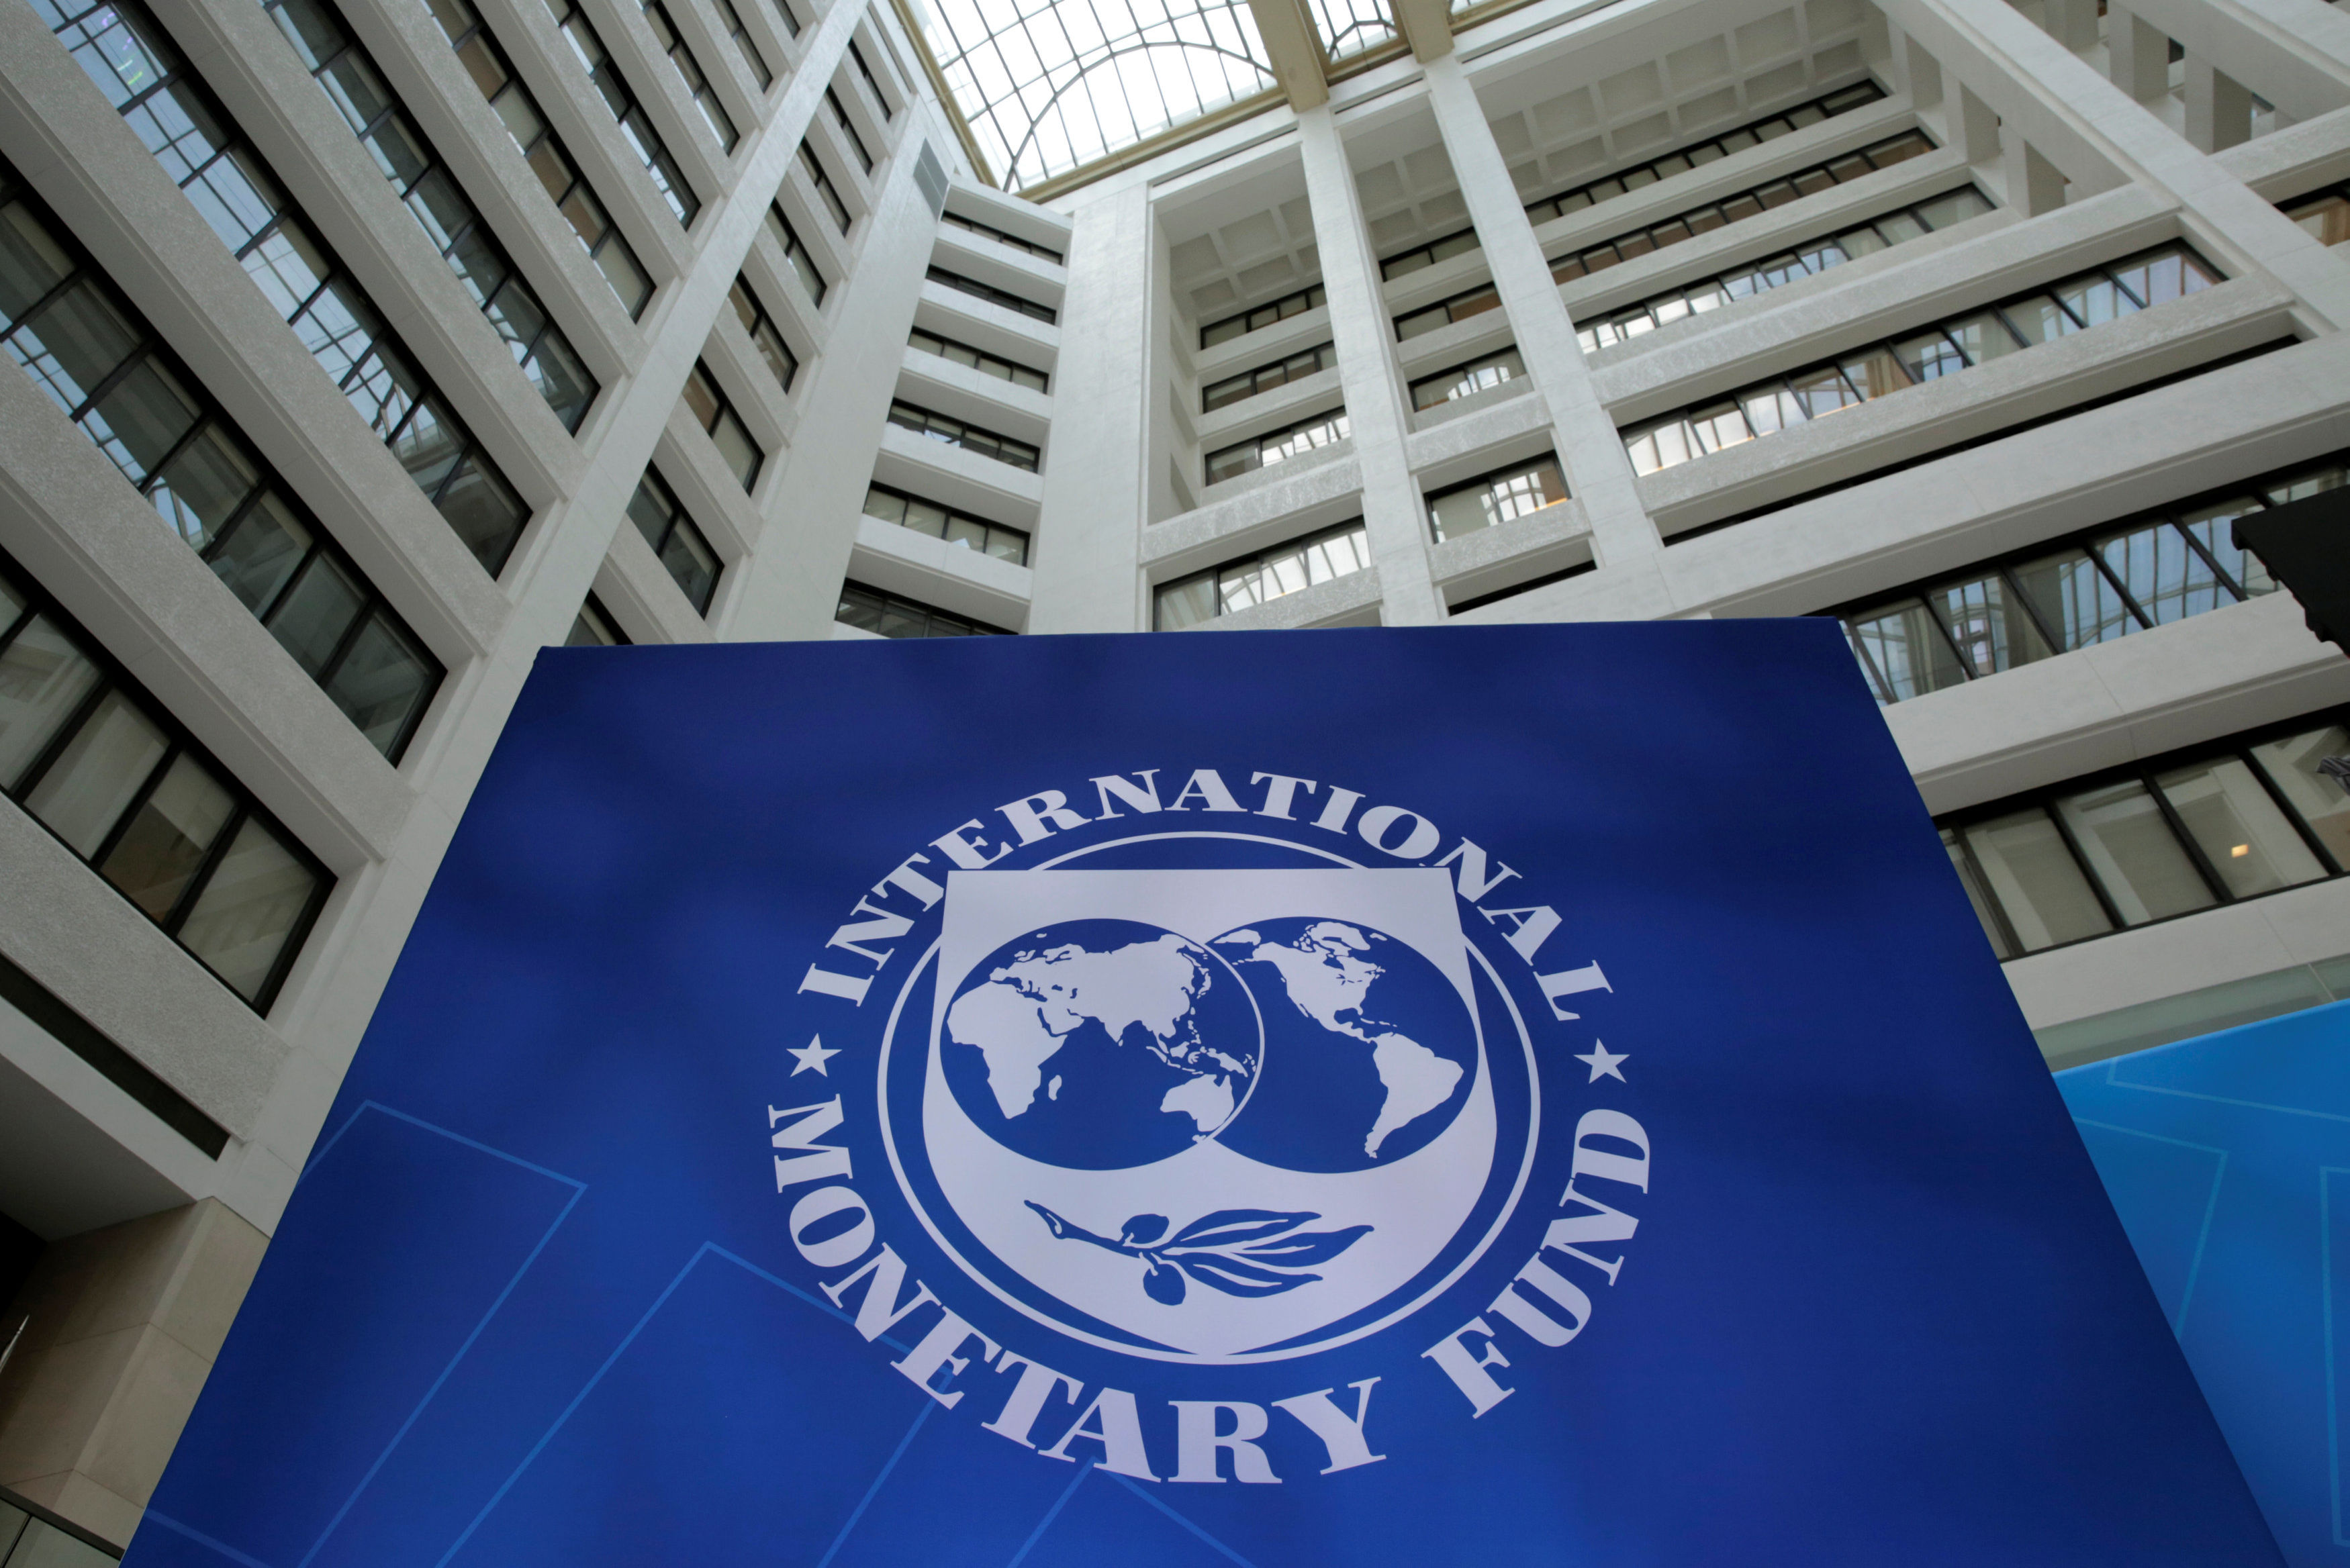 Мвф цб. Международный валютный фонд (МВФ) - International monetary Fund (IMF). Здание МВФ США. Флаг МВФ. Здание МВФ В Вашингтоне.